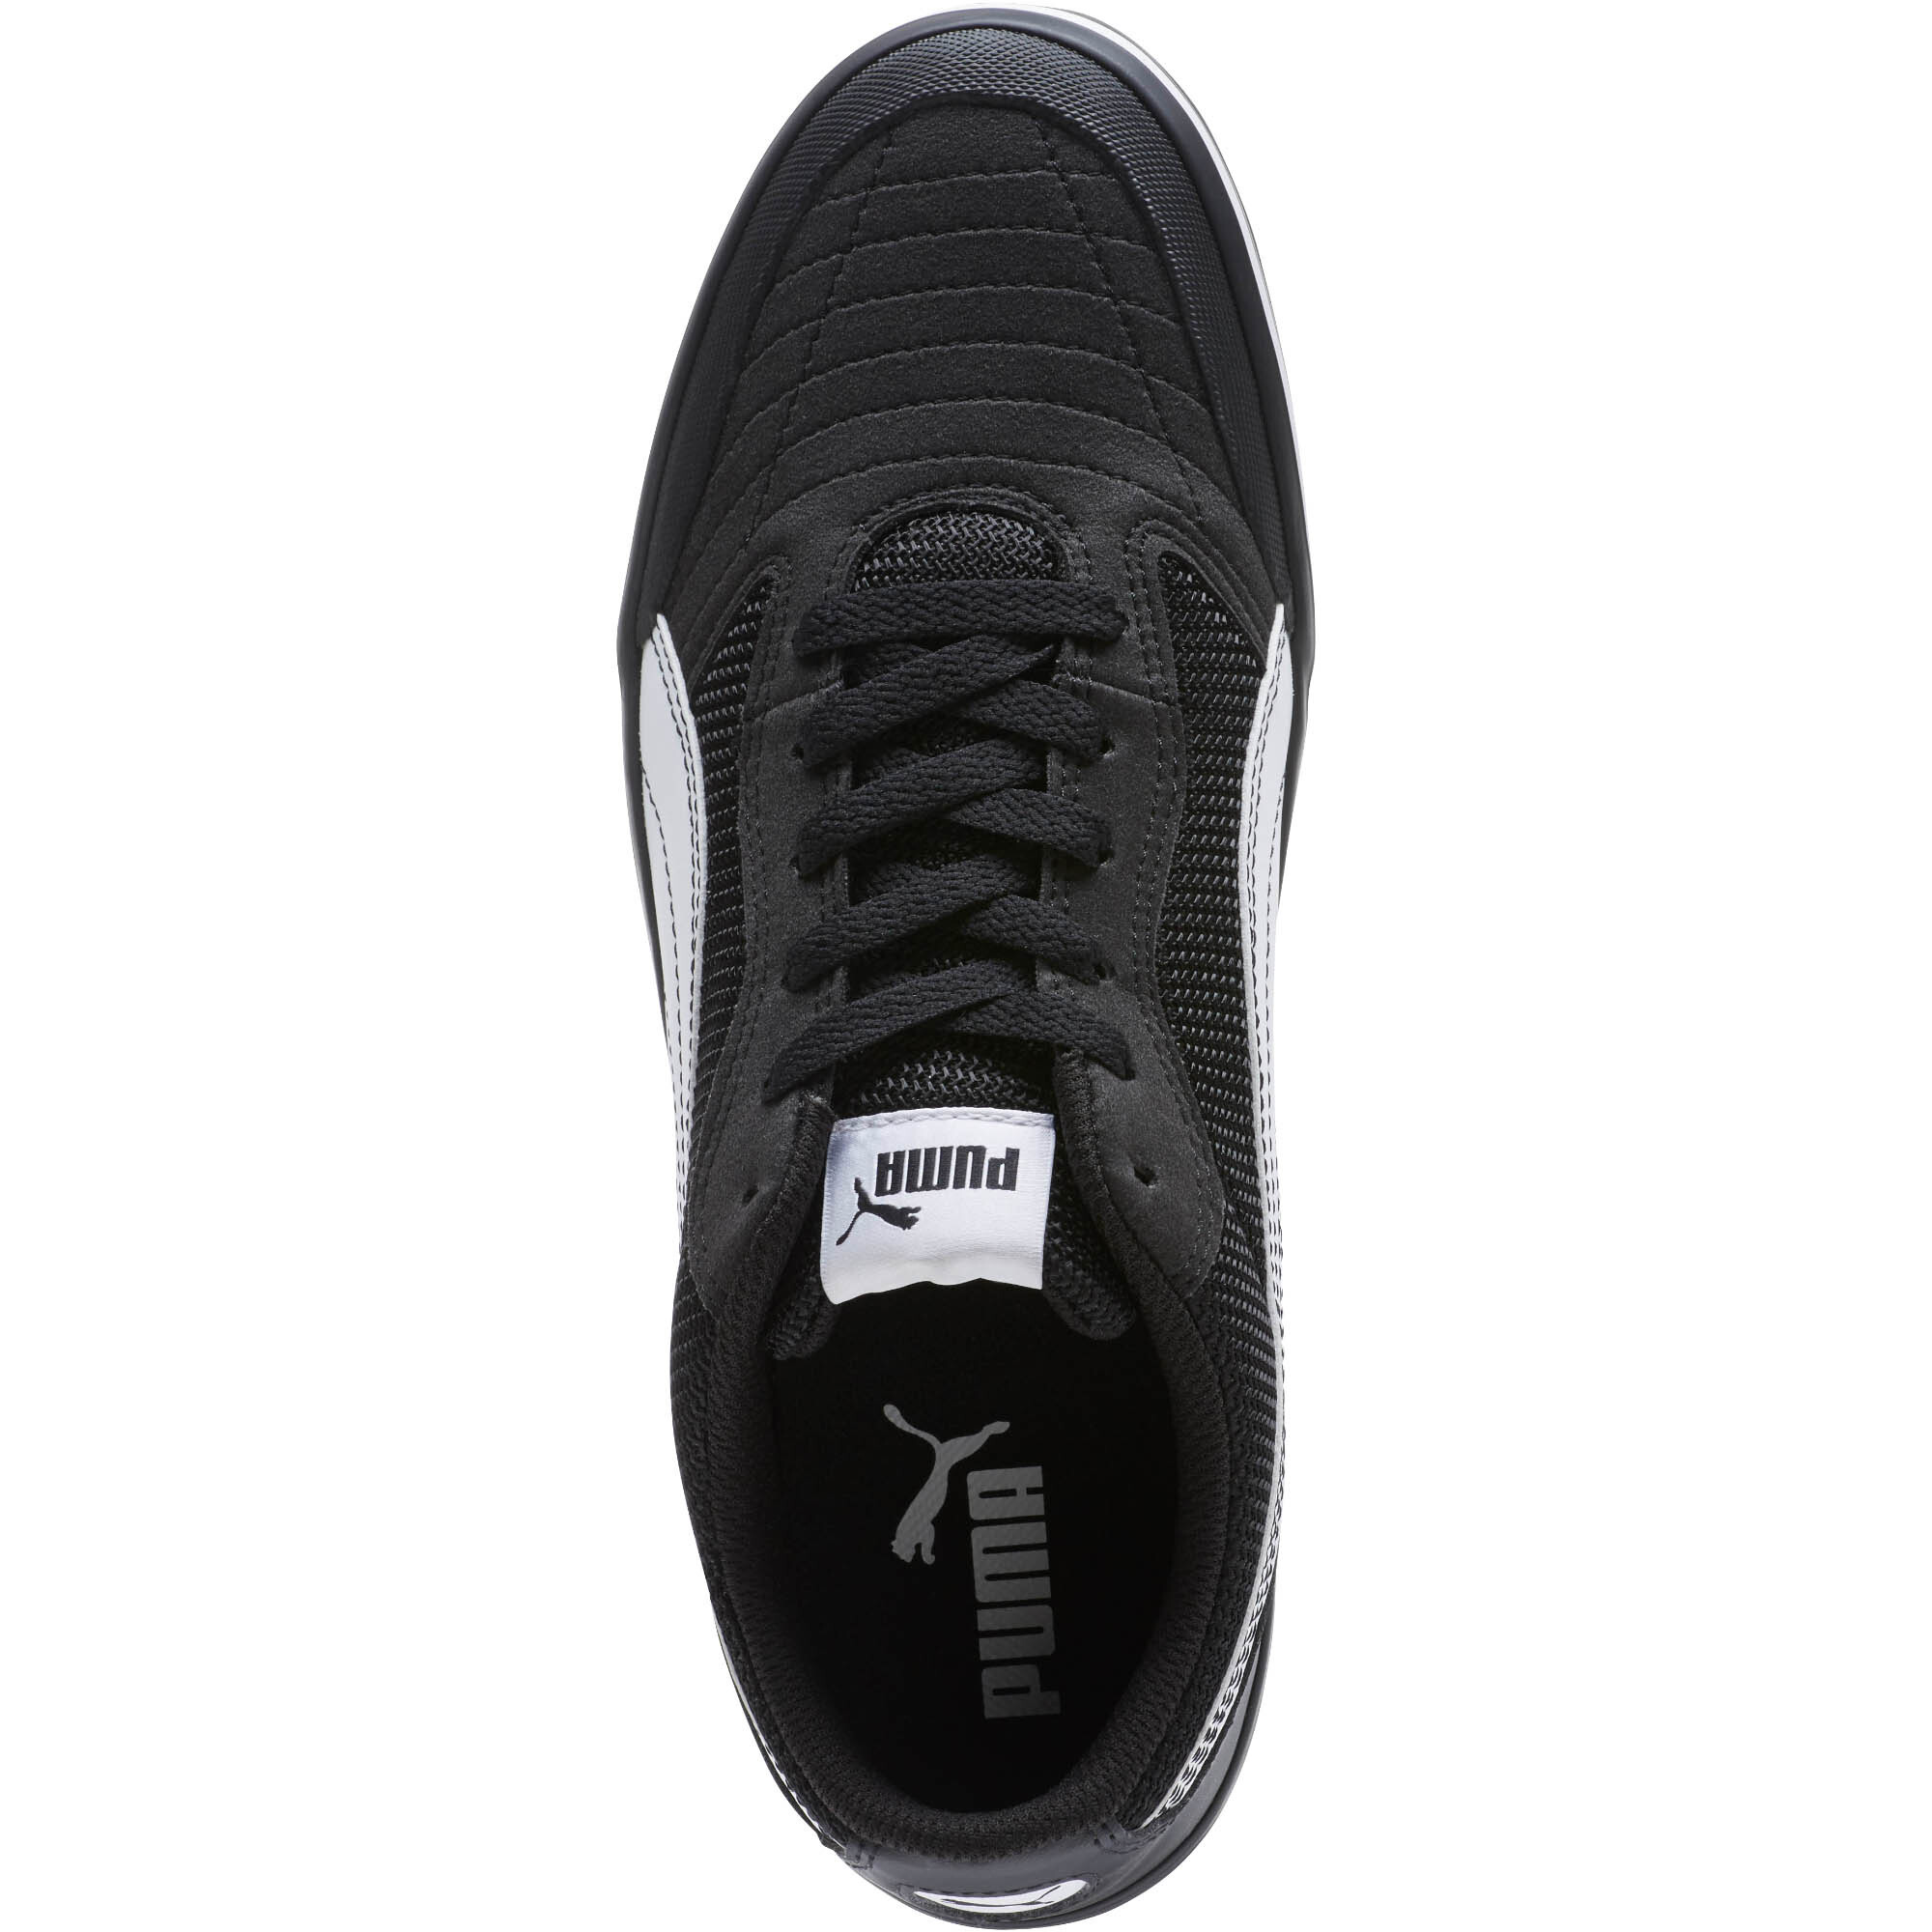 PUMA Astro Sala Sneakers Men Shoe Basics | eBay